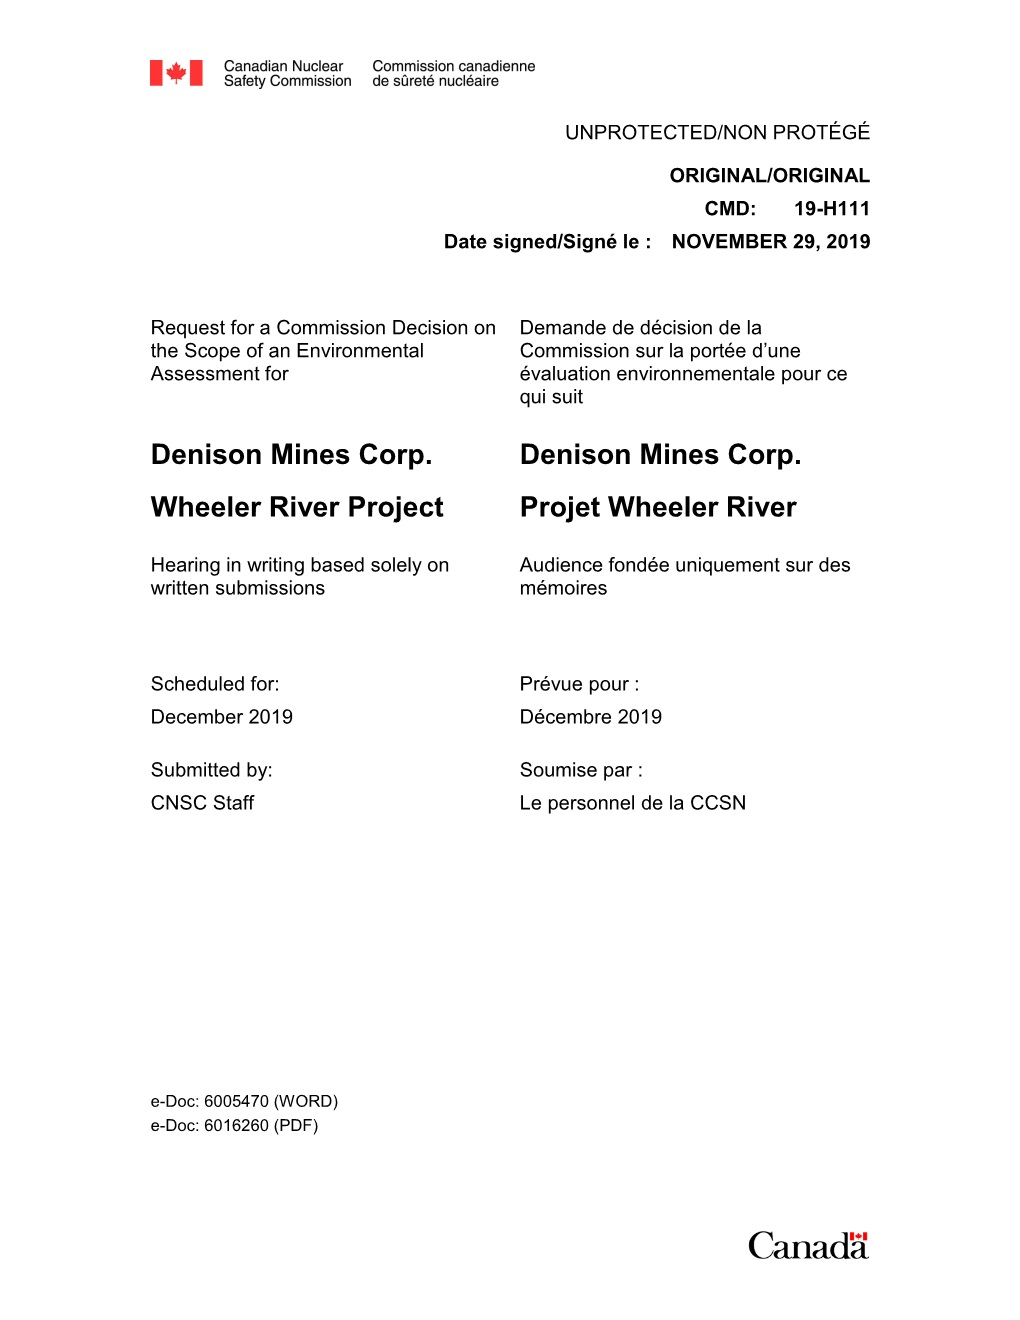 Denison Mines Corp. Wheeler River Project Denison Mines Corp. Projet